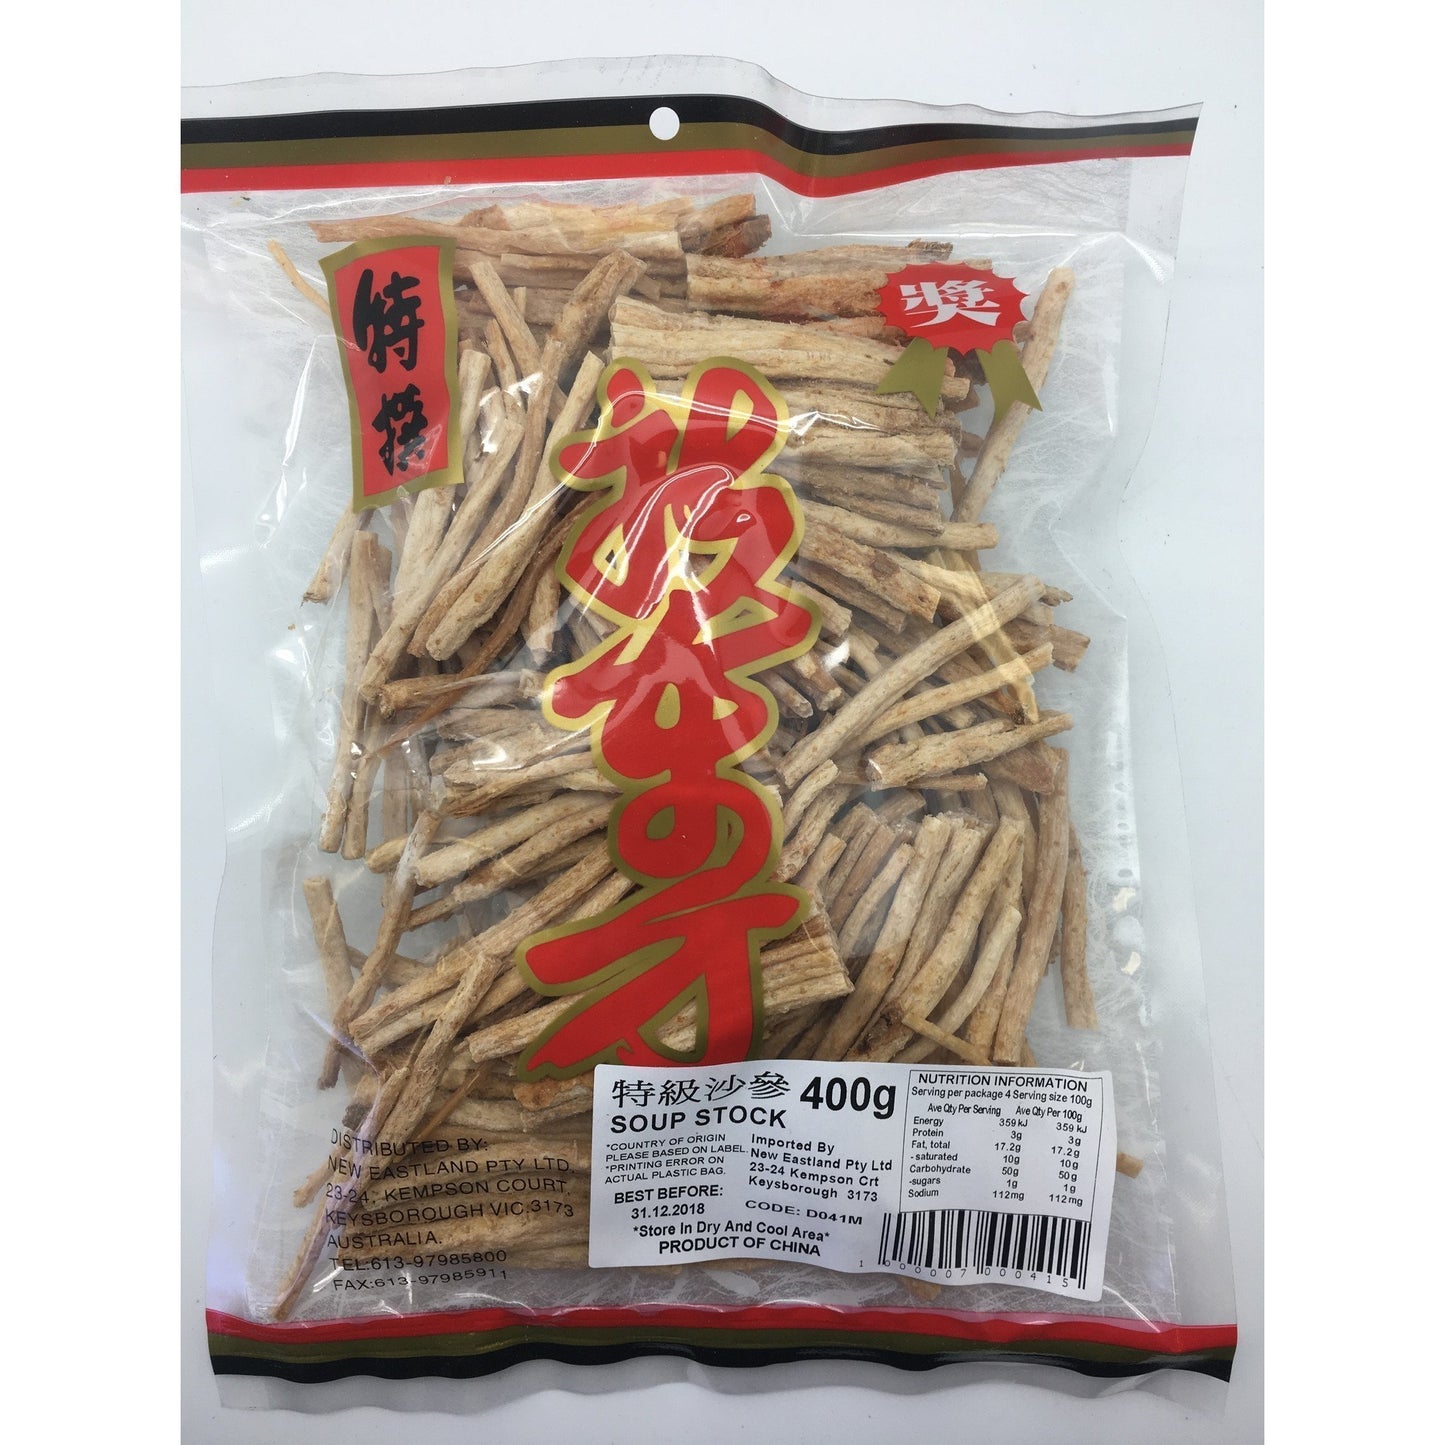 D041M New Eastland Pty Ltd - Soup Stock 400g - 25 bags / 1 CTN - New Eastland Pty Ltd - Asian food wholesalers